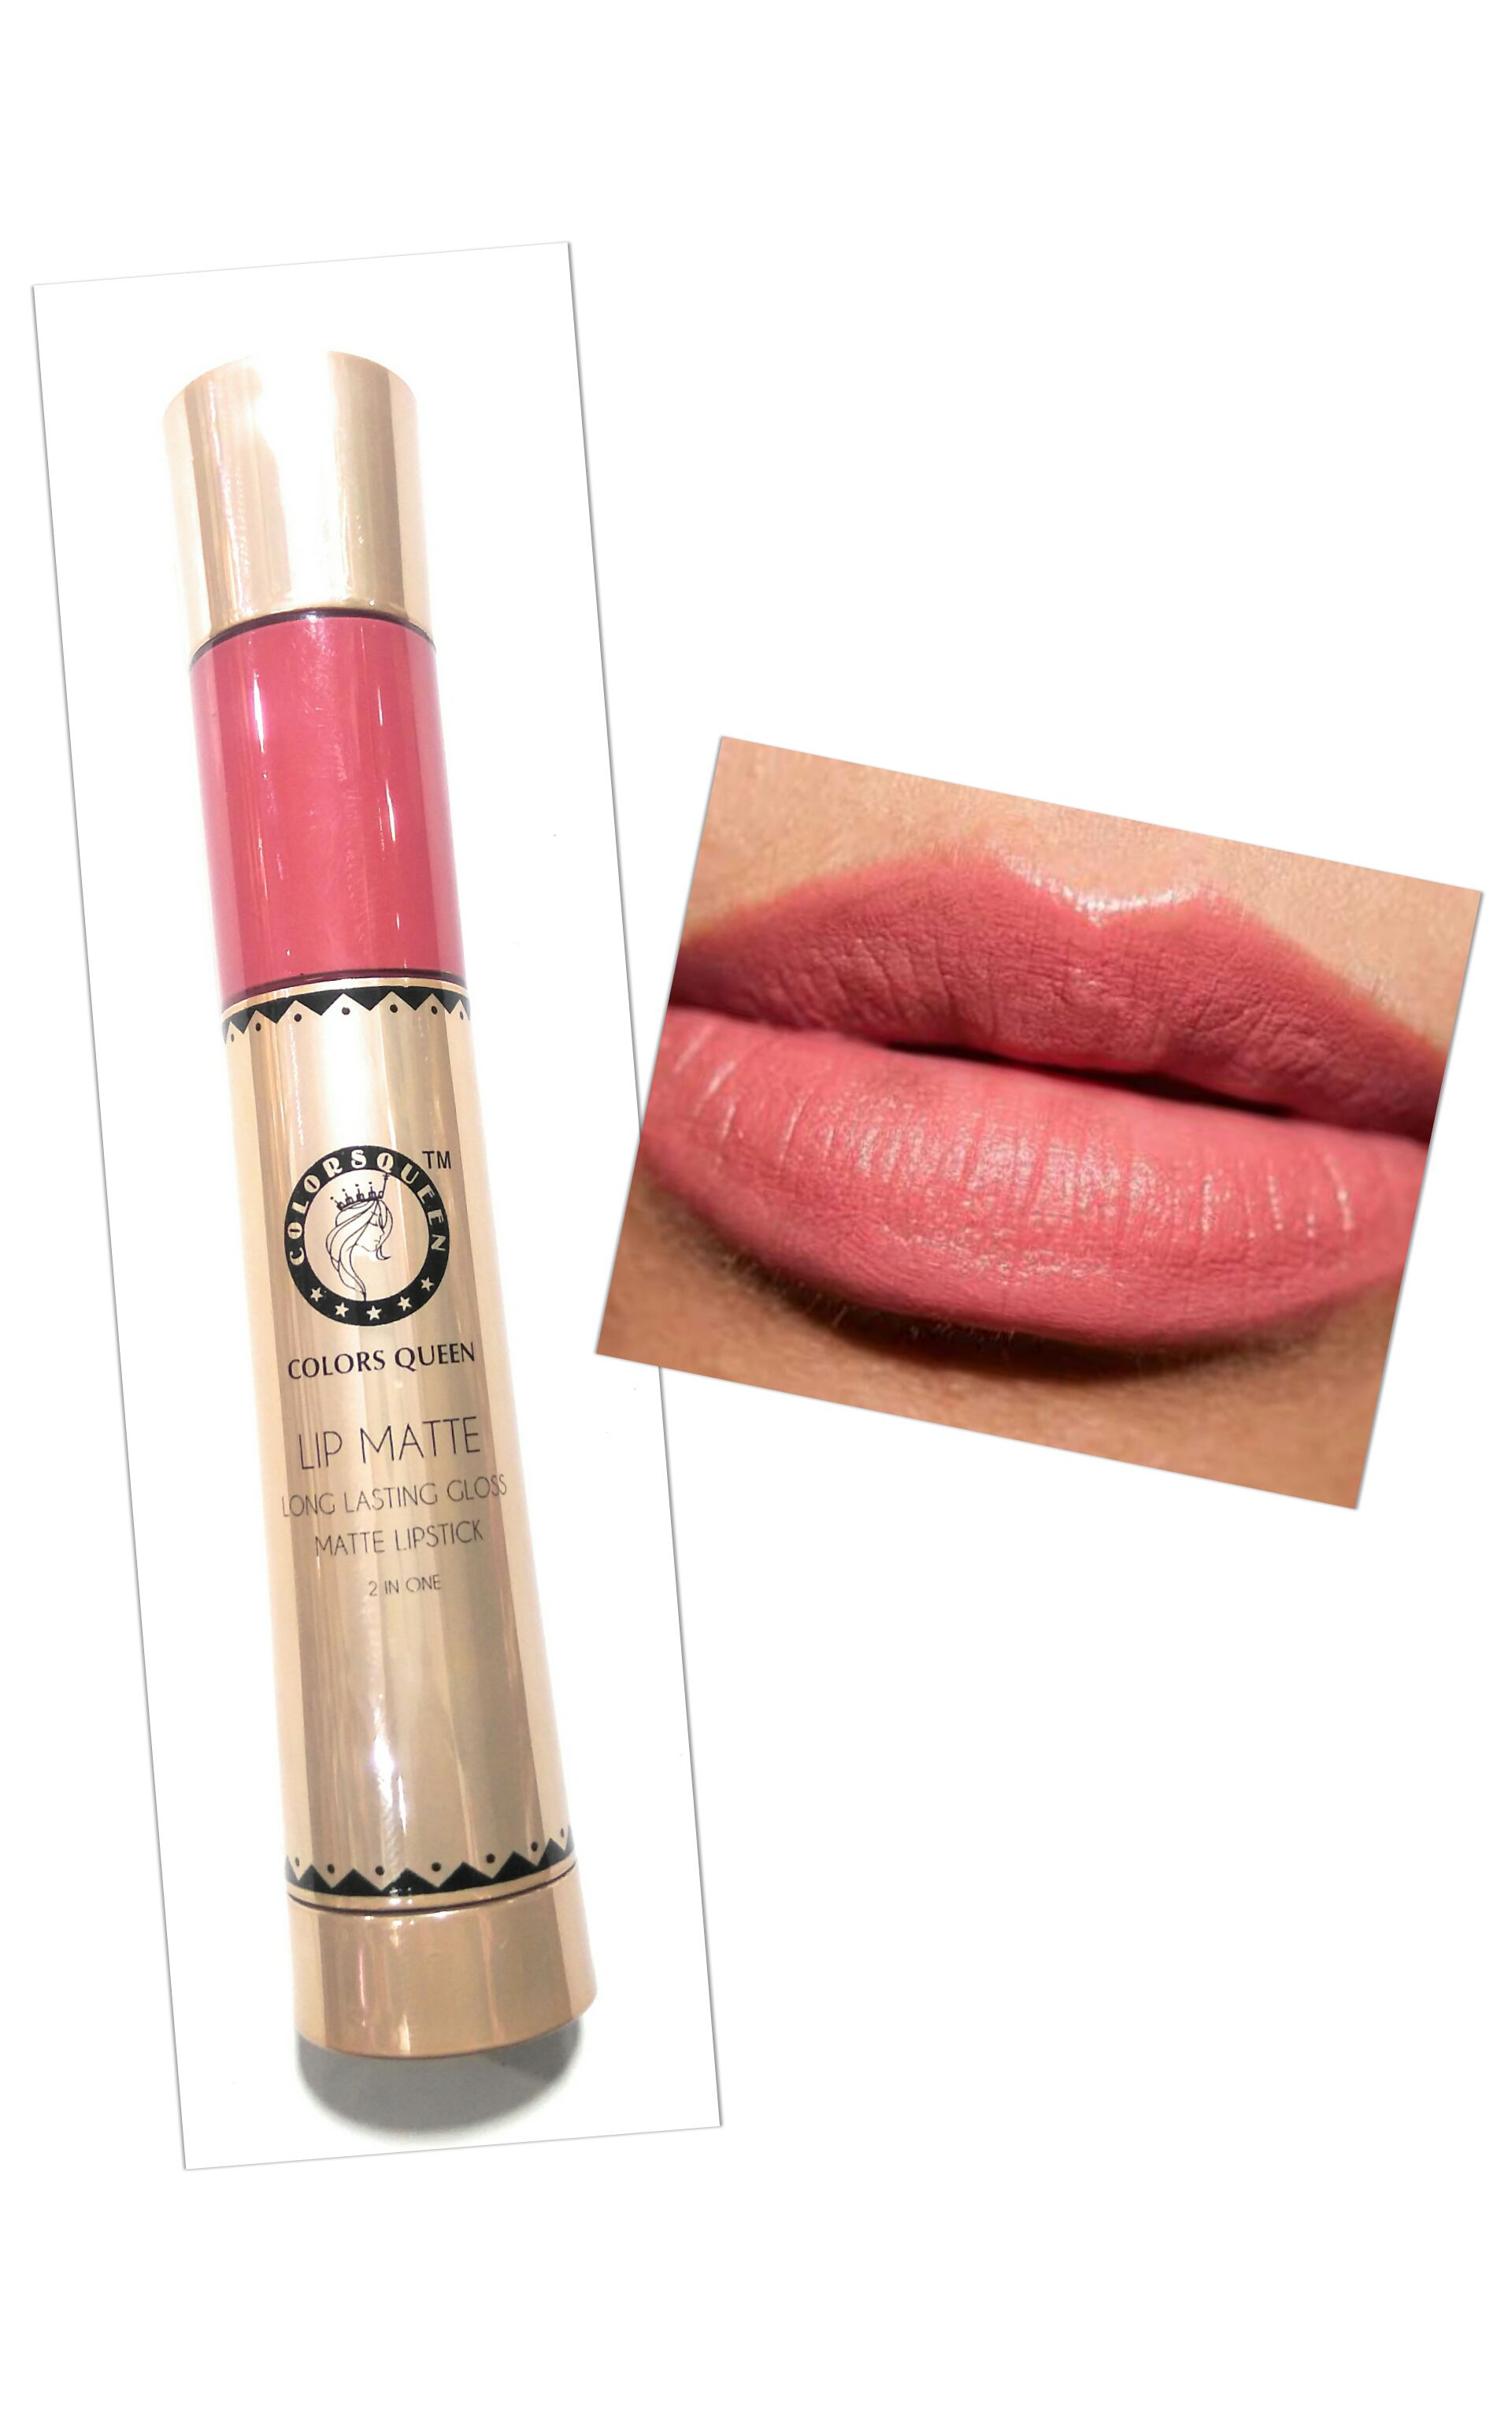     			Colors Queen 2 In 1 Matte Lip Gloss 10ml & Lipstick Peach